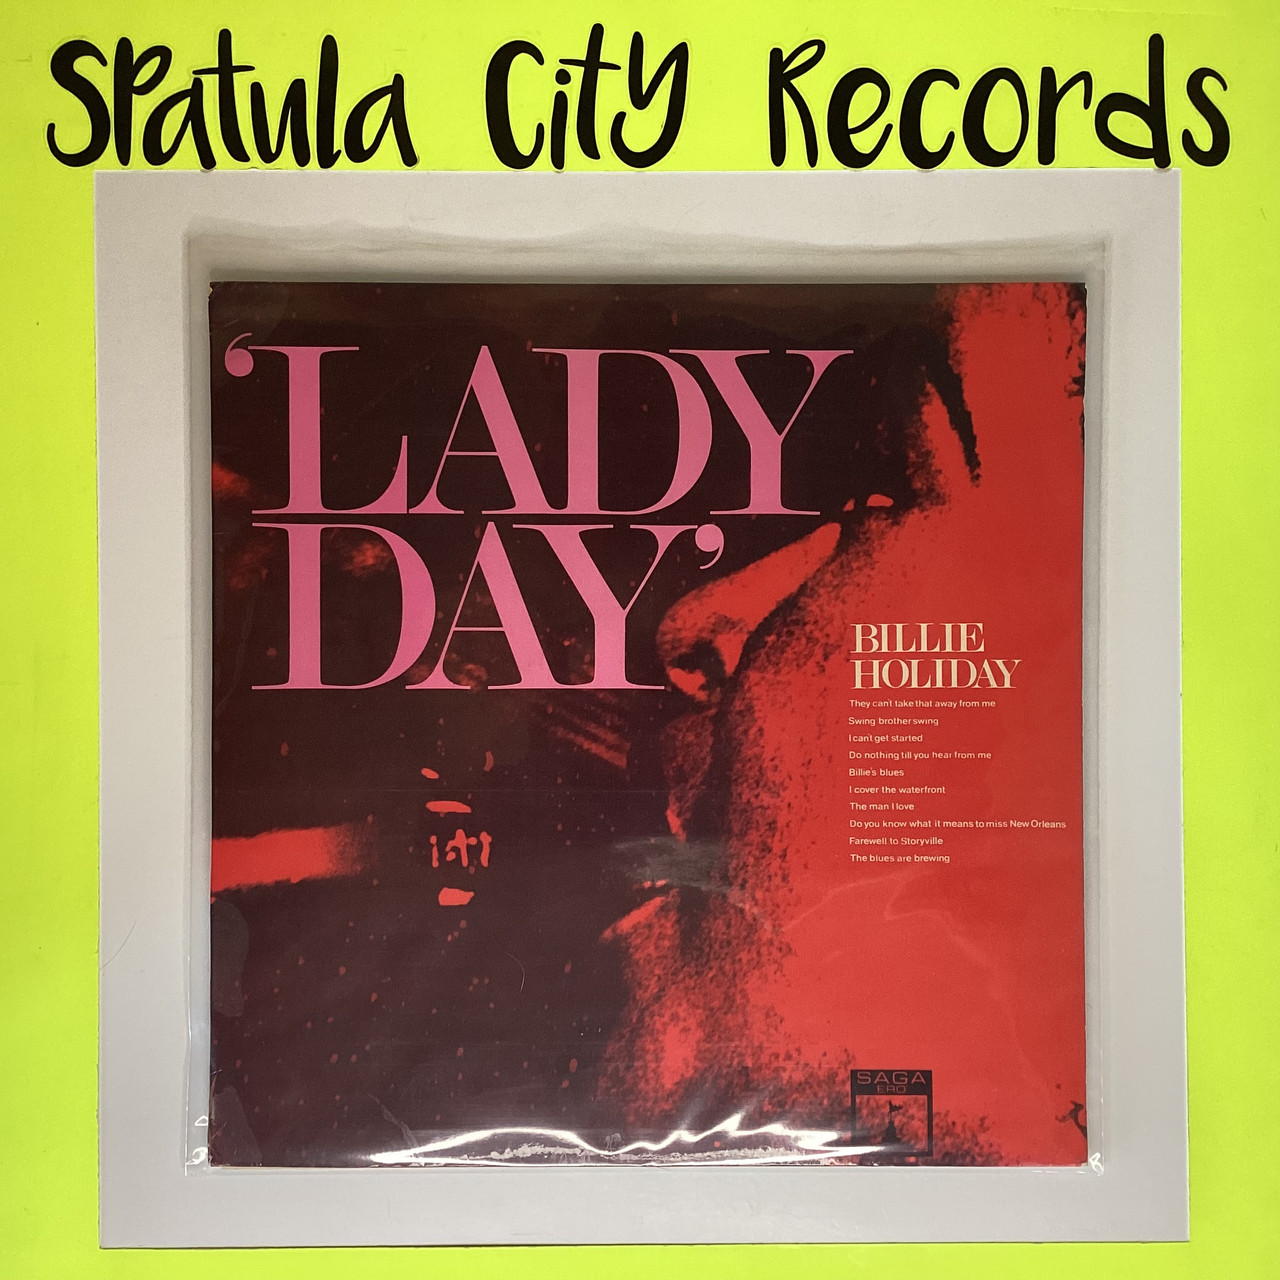 Billie Holiday - Lady Day - UK IMPORT - vinyl record LP